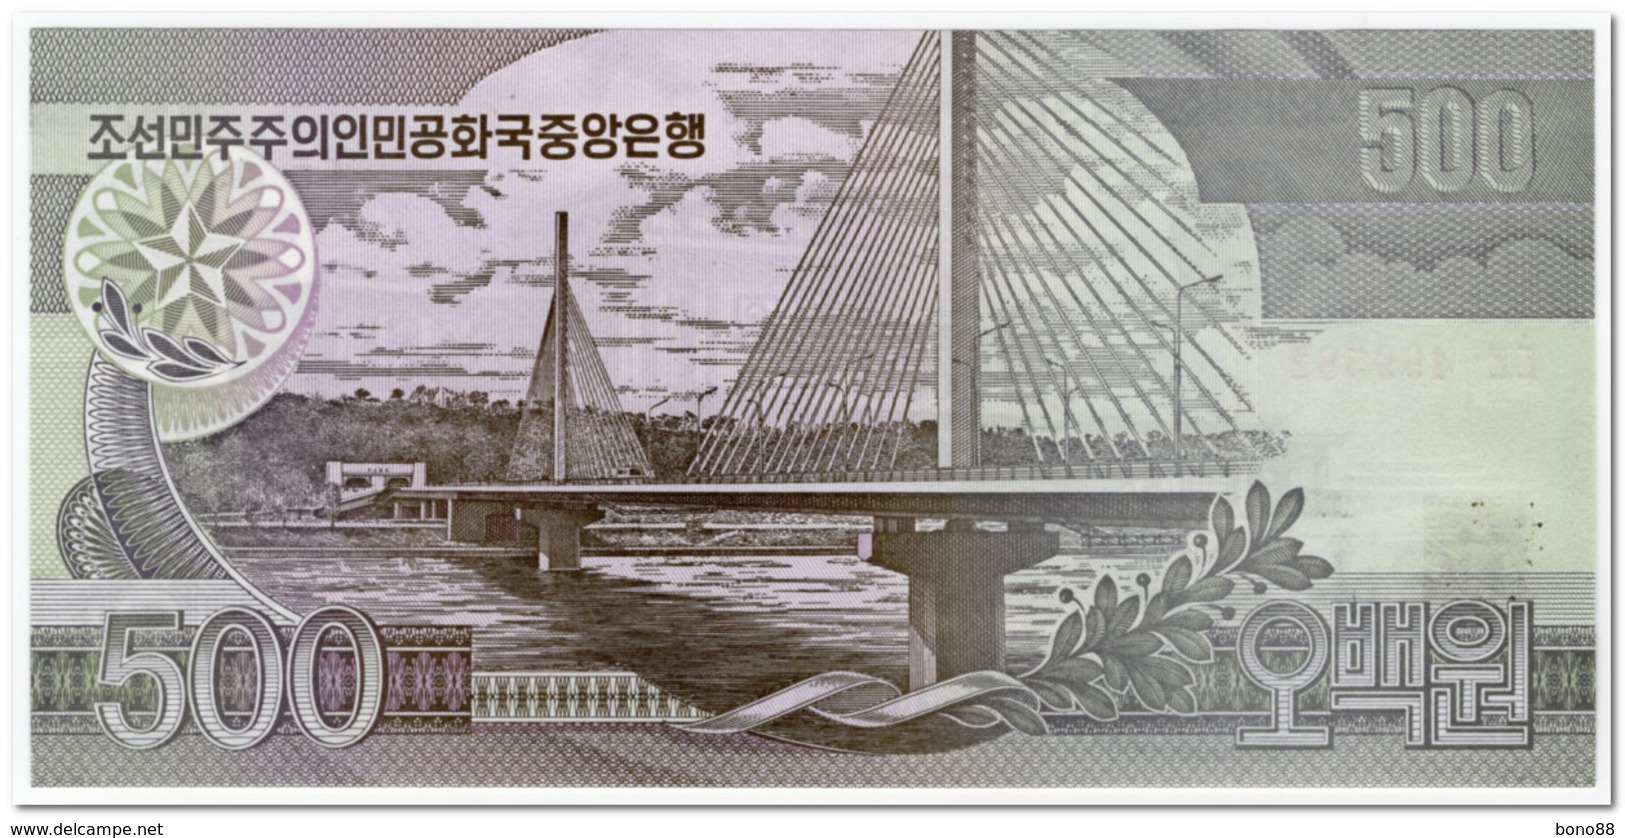 NORTH KOREA,500 WON,1998,P.44,UNC - Korea, North